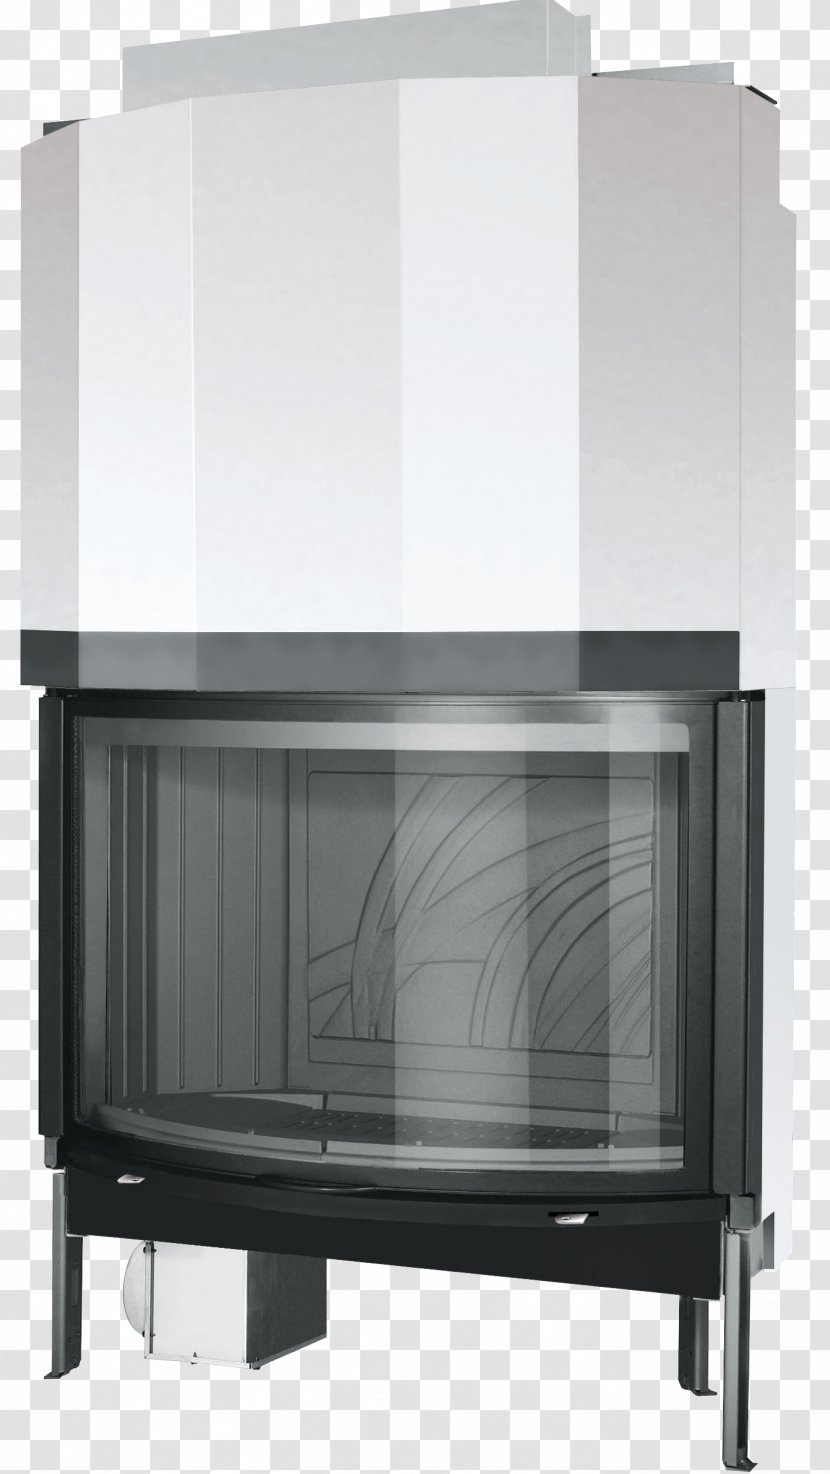 Fireplace Firebox Chimney Supra Cast Iron Transparent PNG